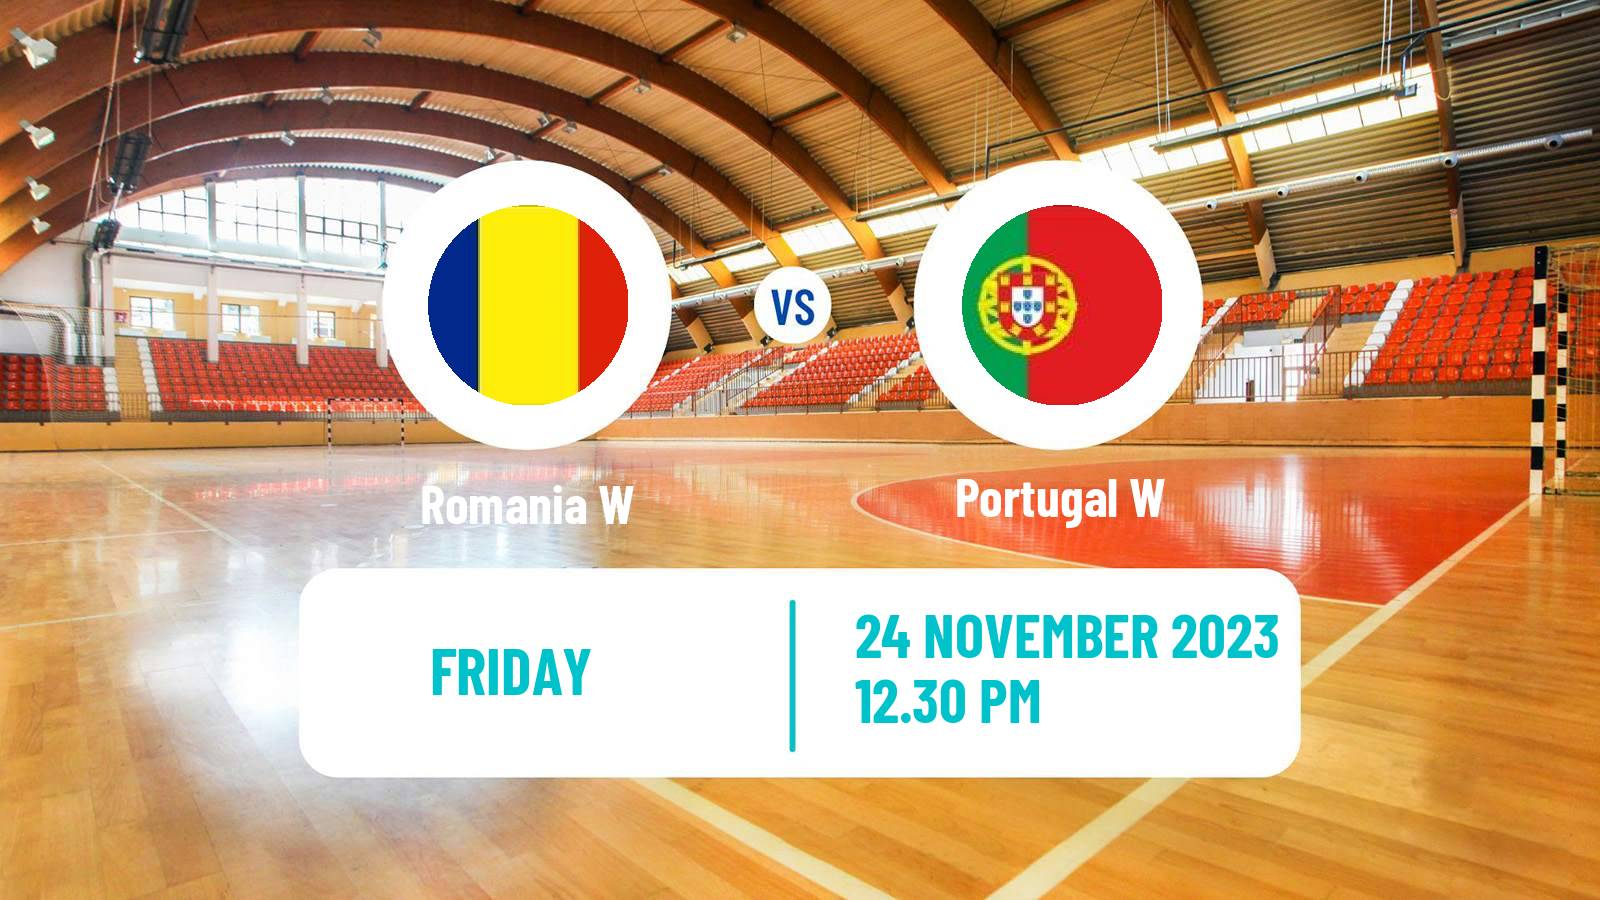 Handball Friendly International Handball Women Romania W - Portugal W